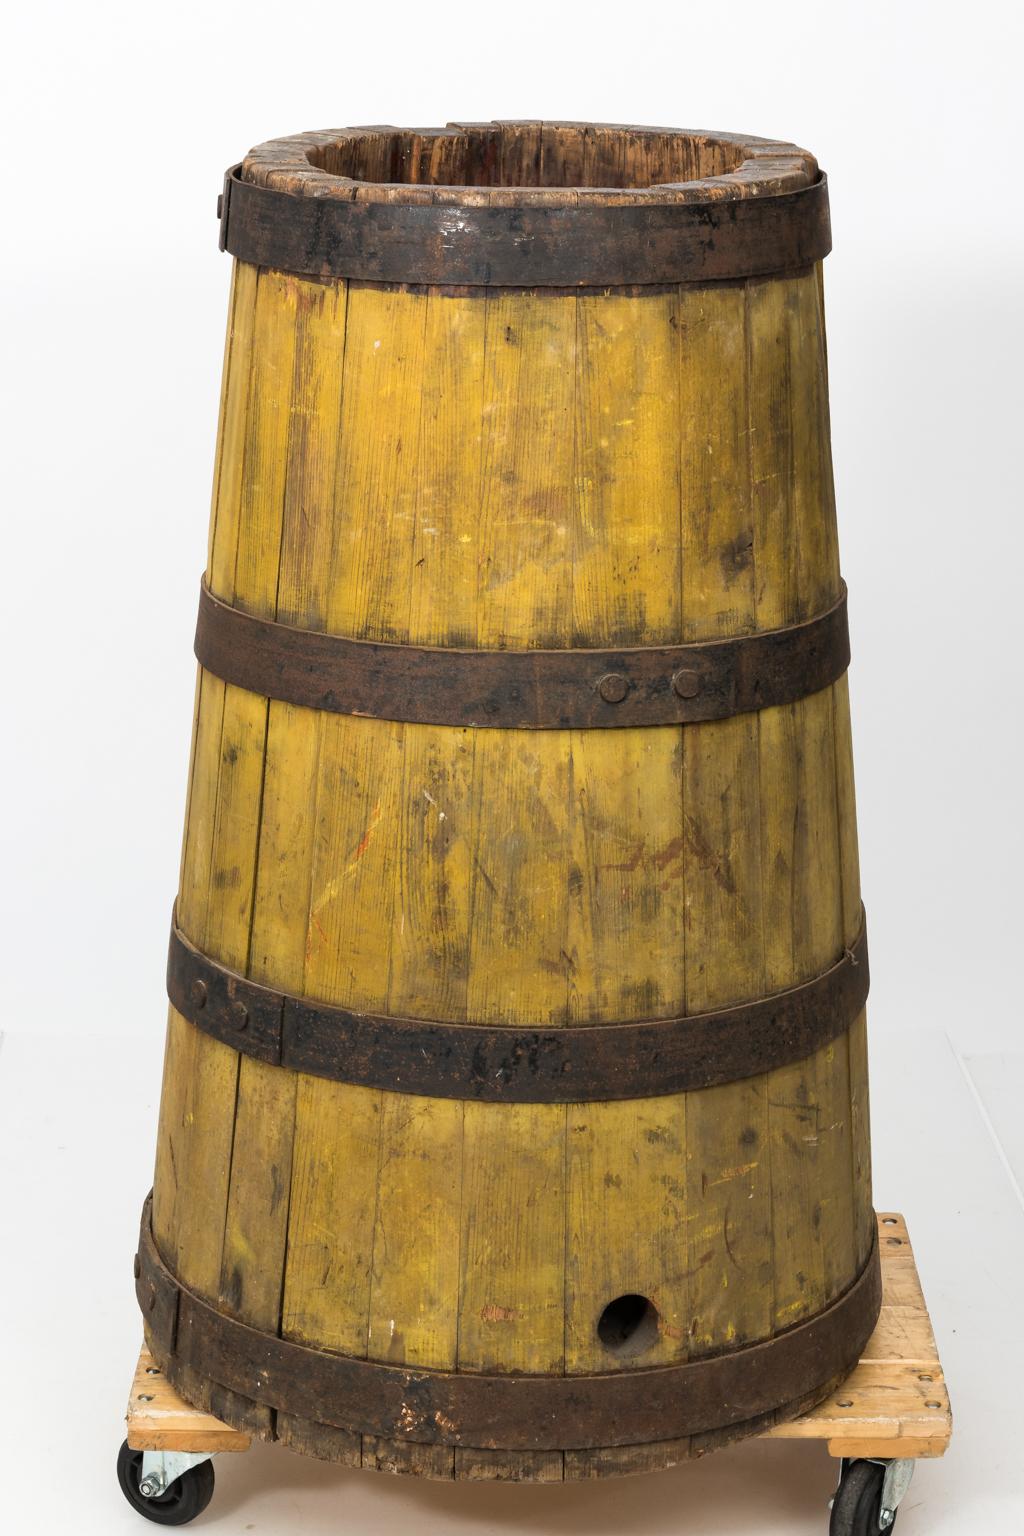 Painted Rustic Barrel